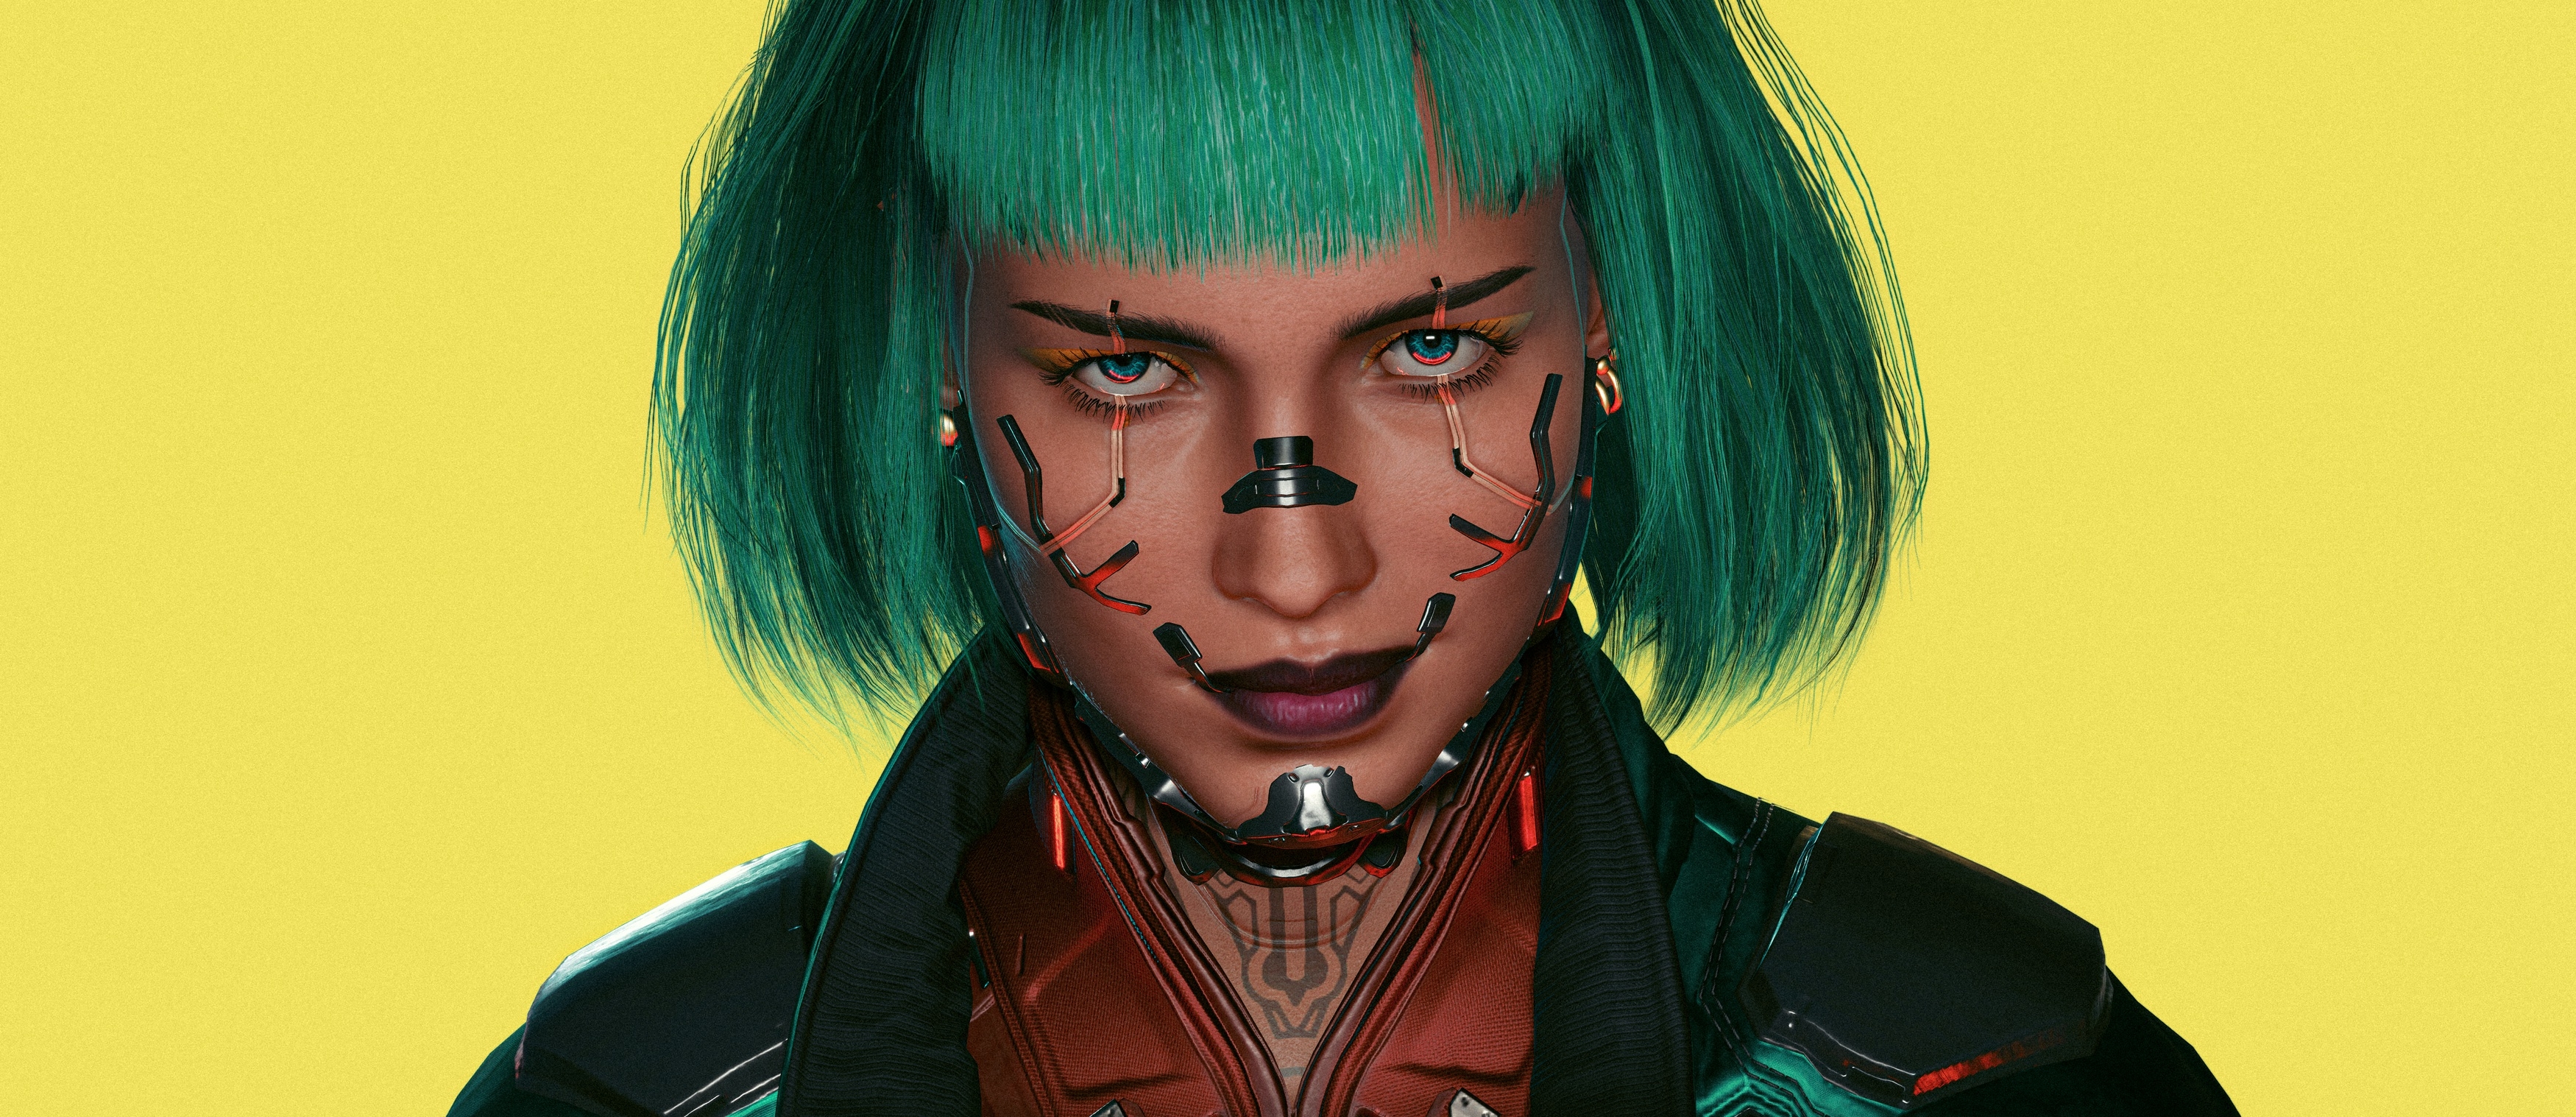 Cyberpunk 2077 Cyborg Girl Art 4K HD Games Wallpapers, HD Wallpapers